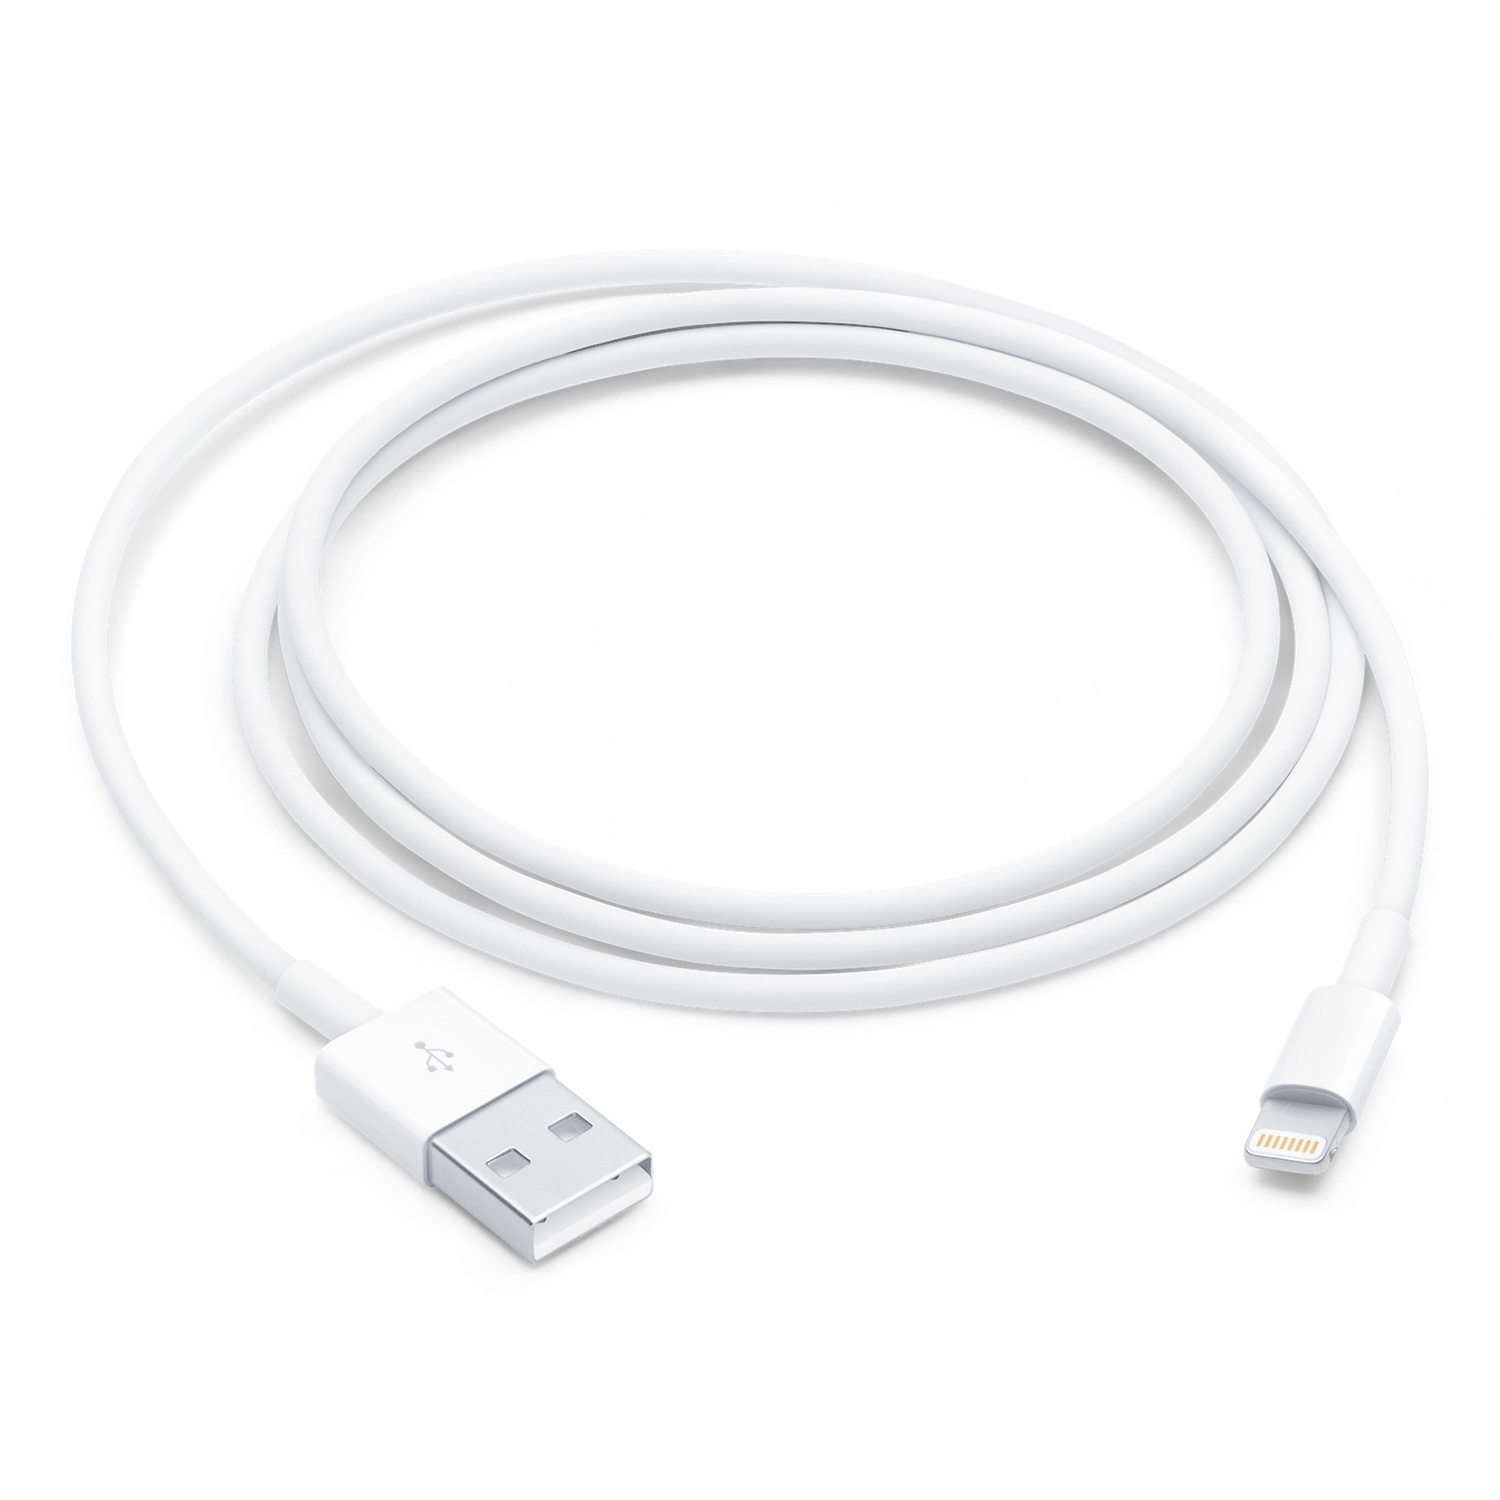 Cabo Apple MXLY2ZM/A Original USB 1 Metro - Branco